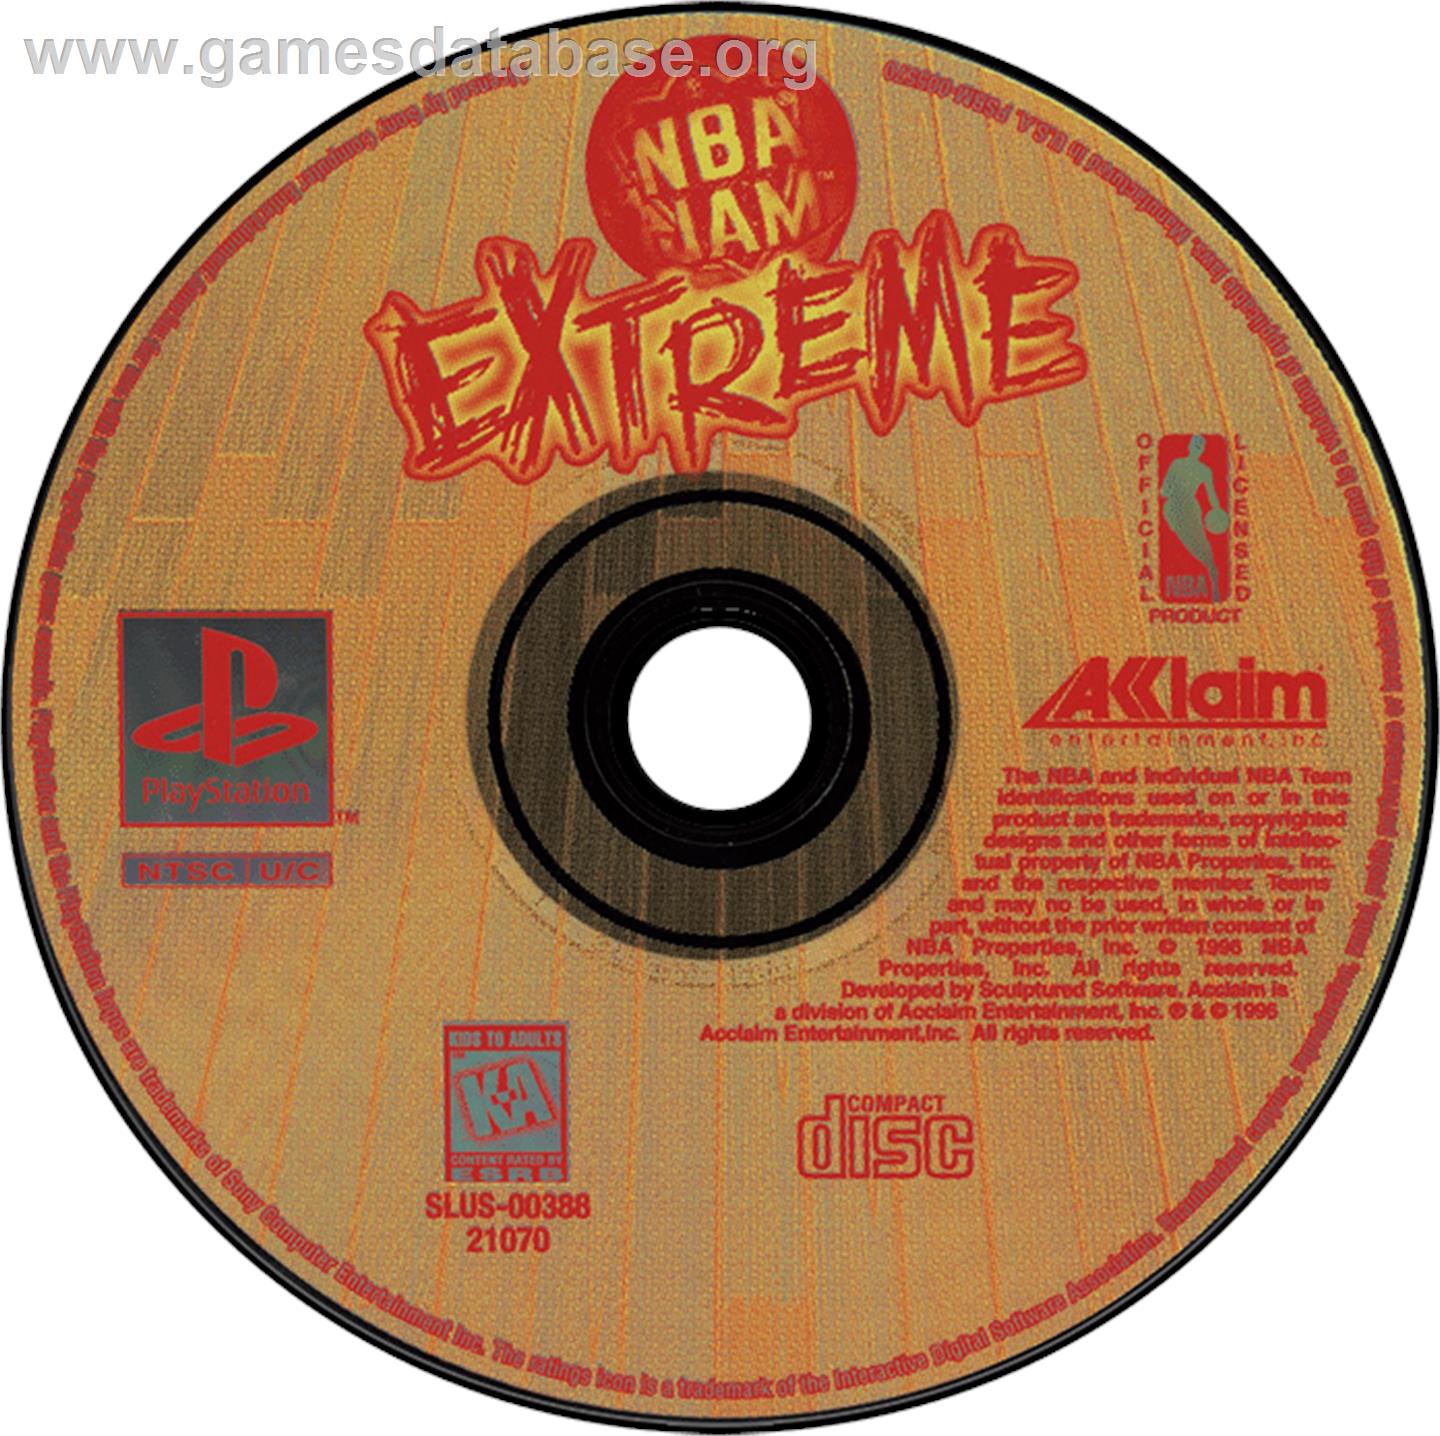 NBA Jam Extreme - Sony Playstation - Artwork - Disc